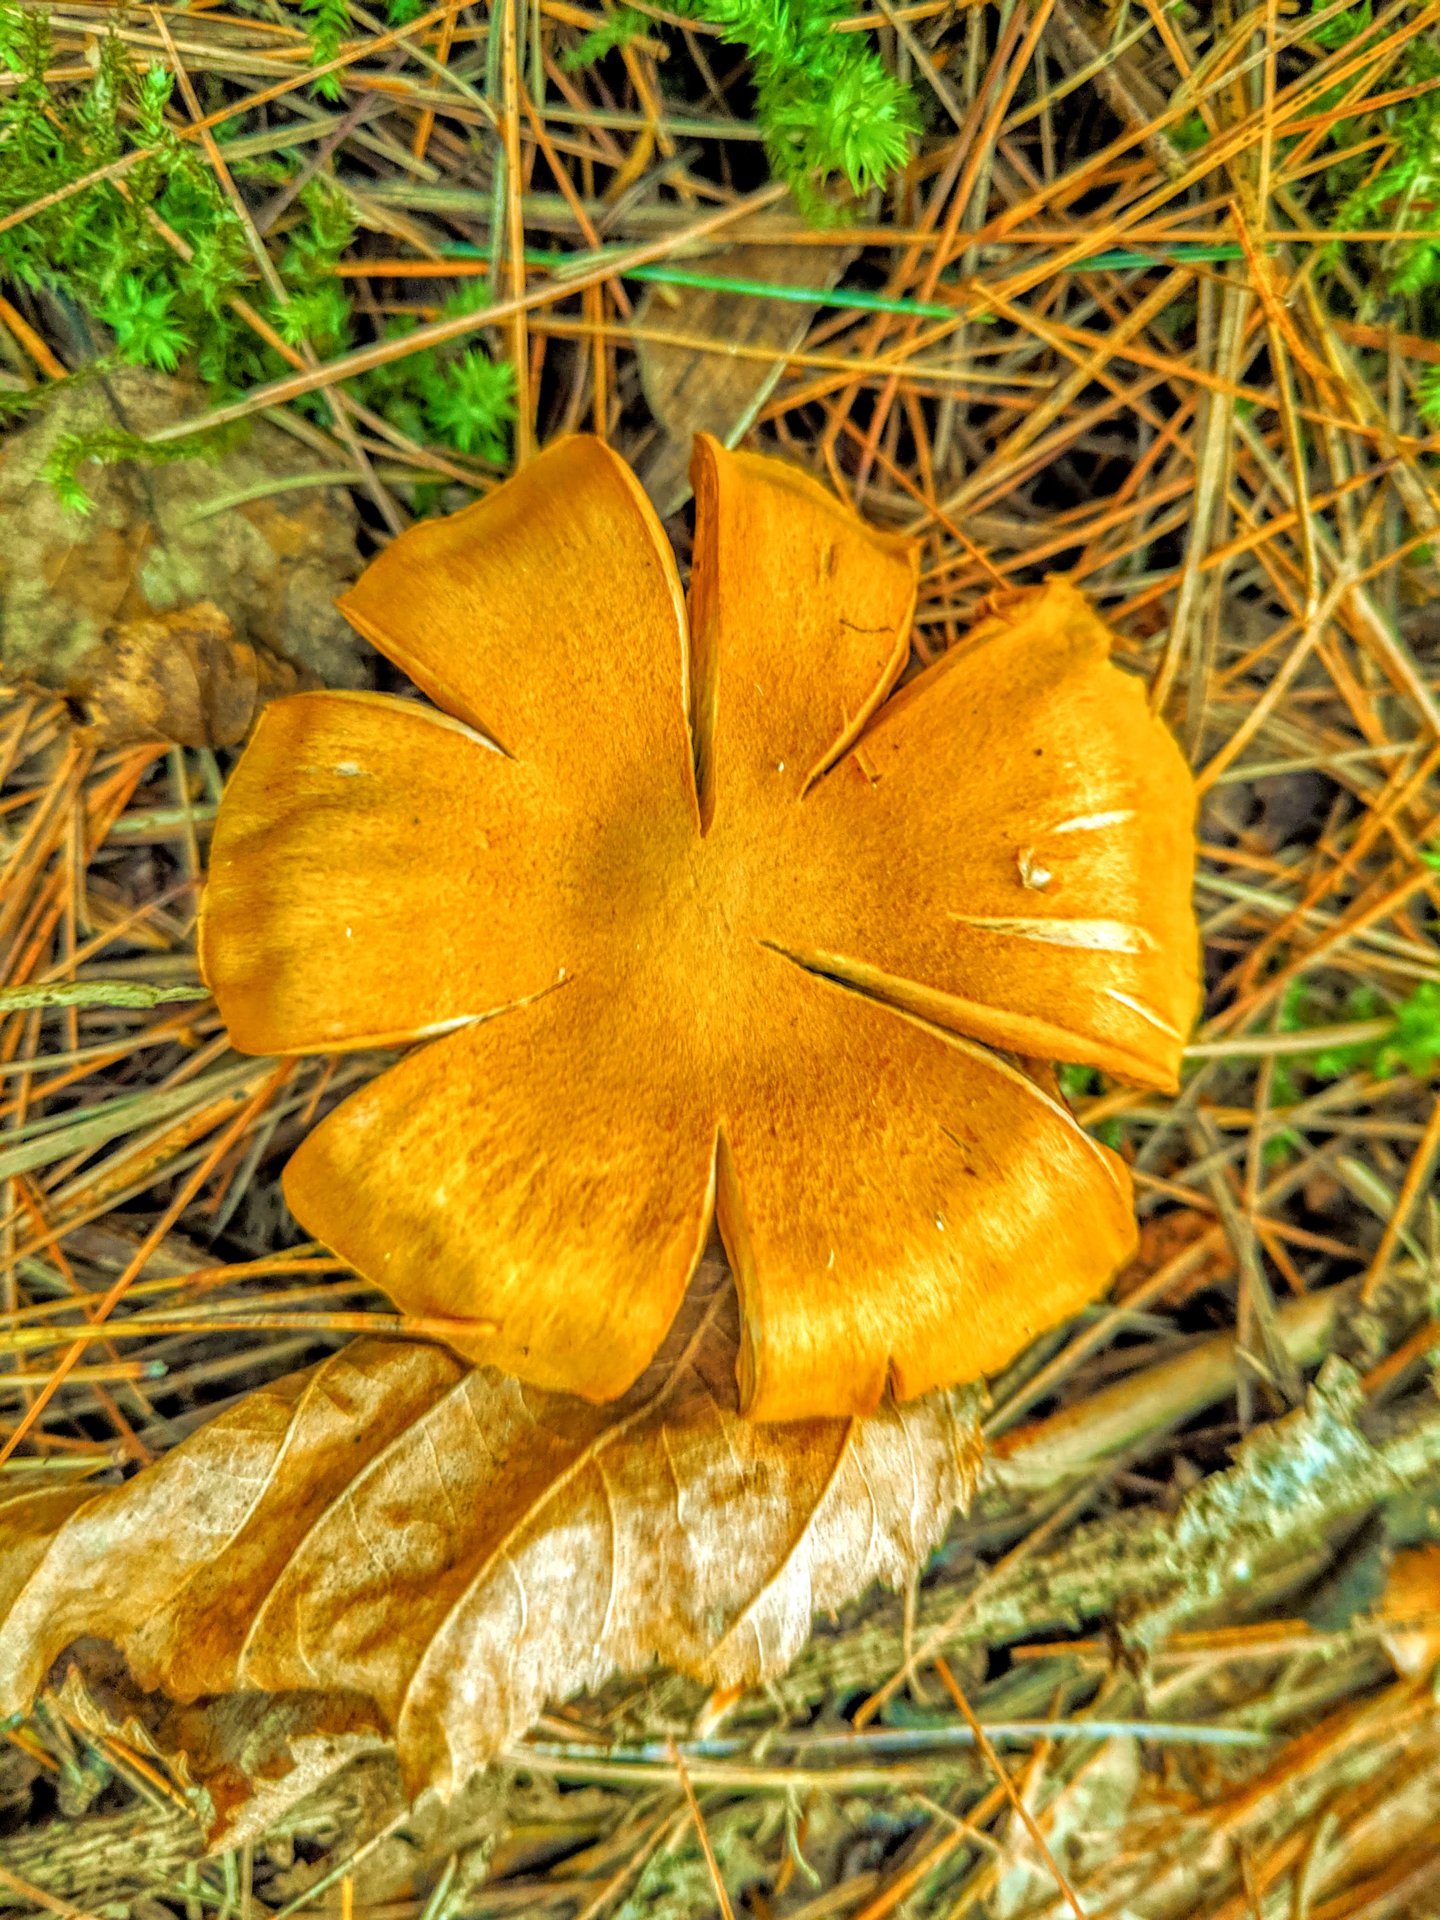 A orange mushroom that looks like a flower, in Downeast Maine. 2020